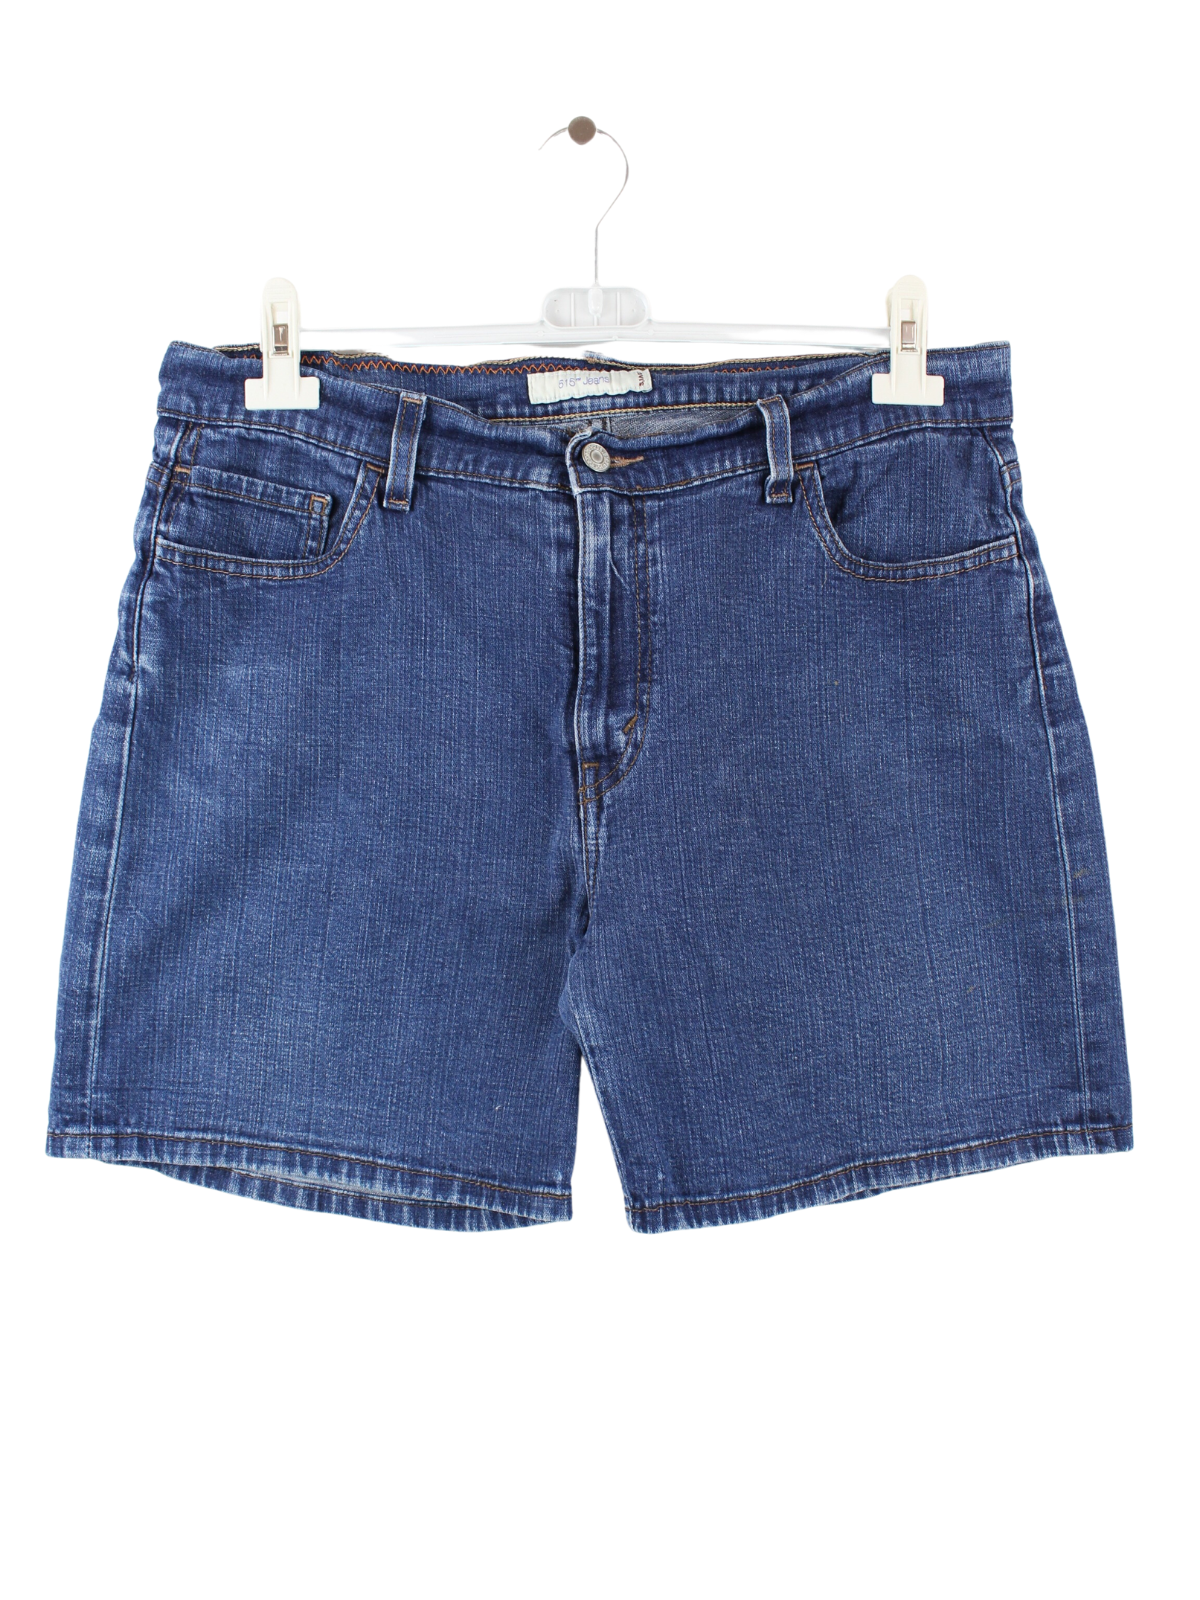 Levi's Damen Jeans Shorts Blau L